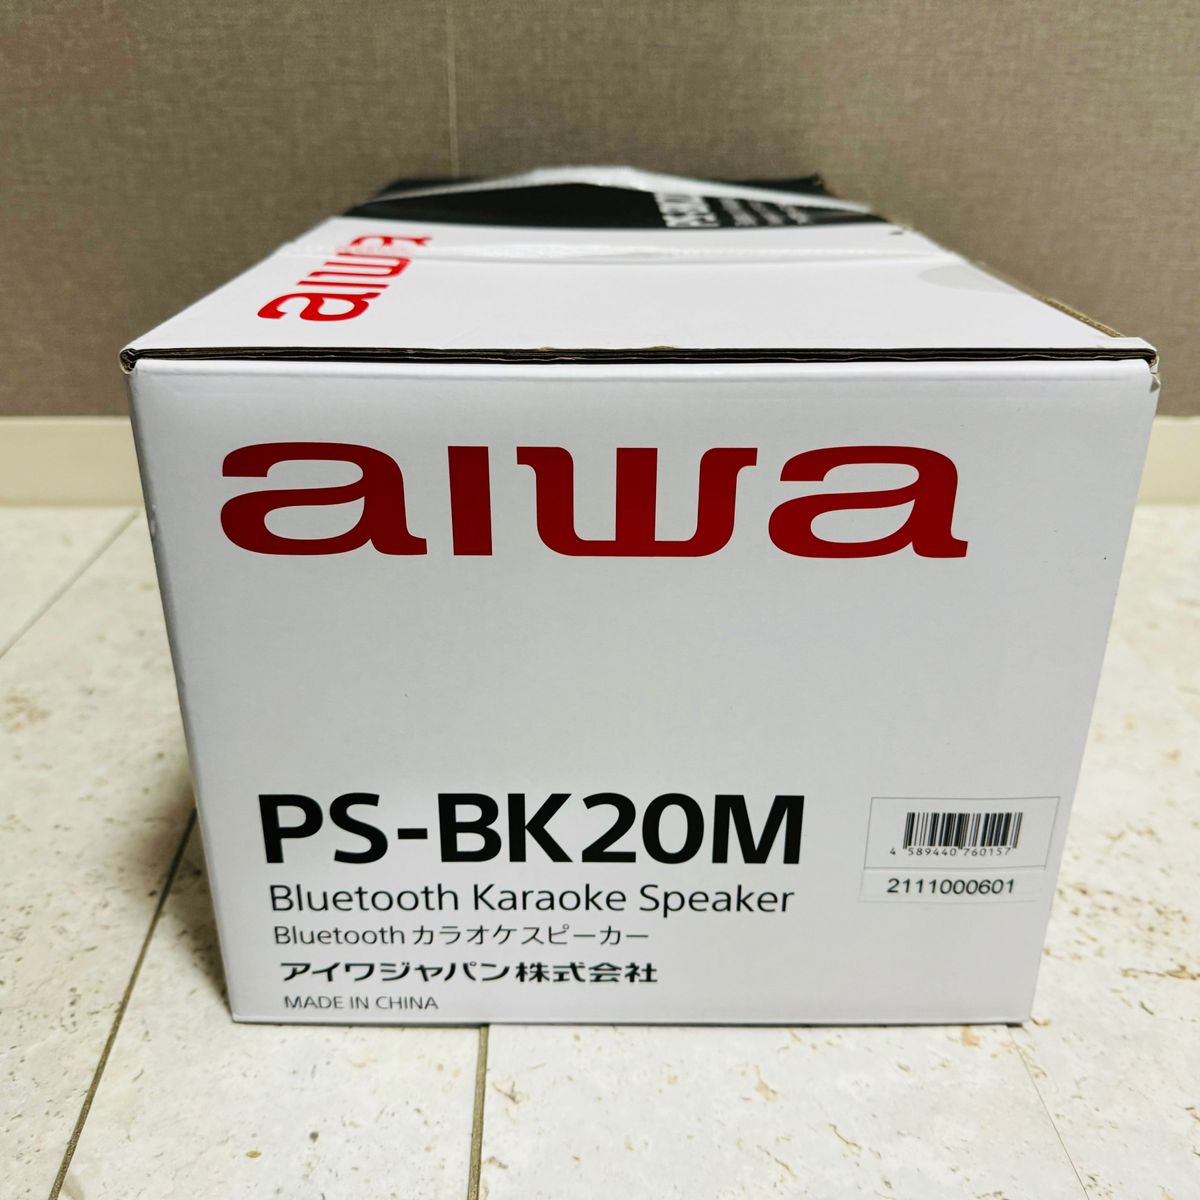 AIWA PS-BK20M Bluetoothカラオケスピーカー PSBK20M